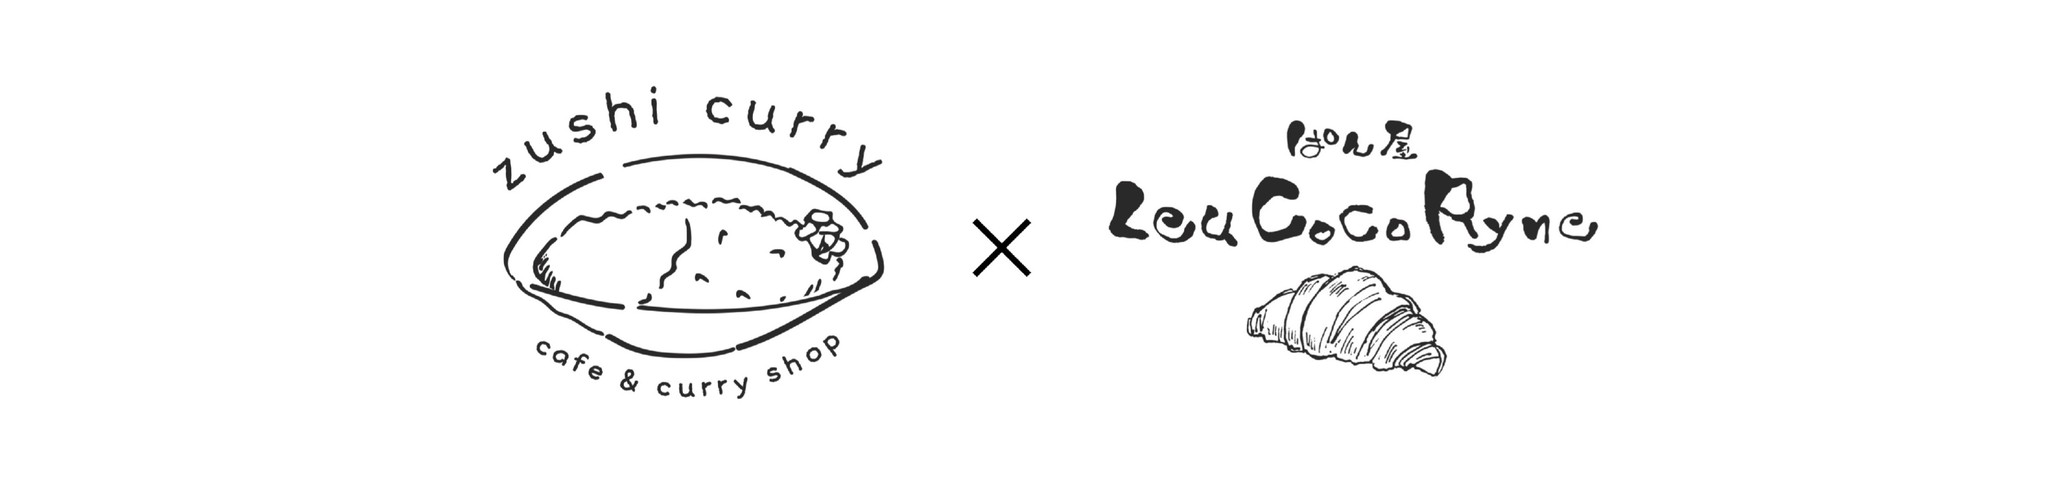 zushi curry & ぱん屋LeuCocoRyne